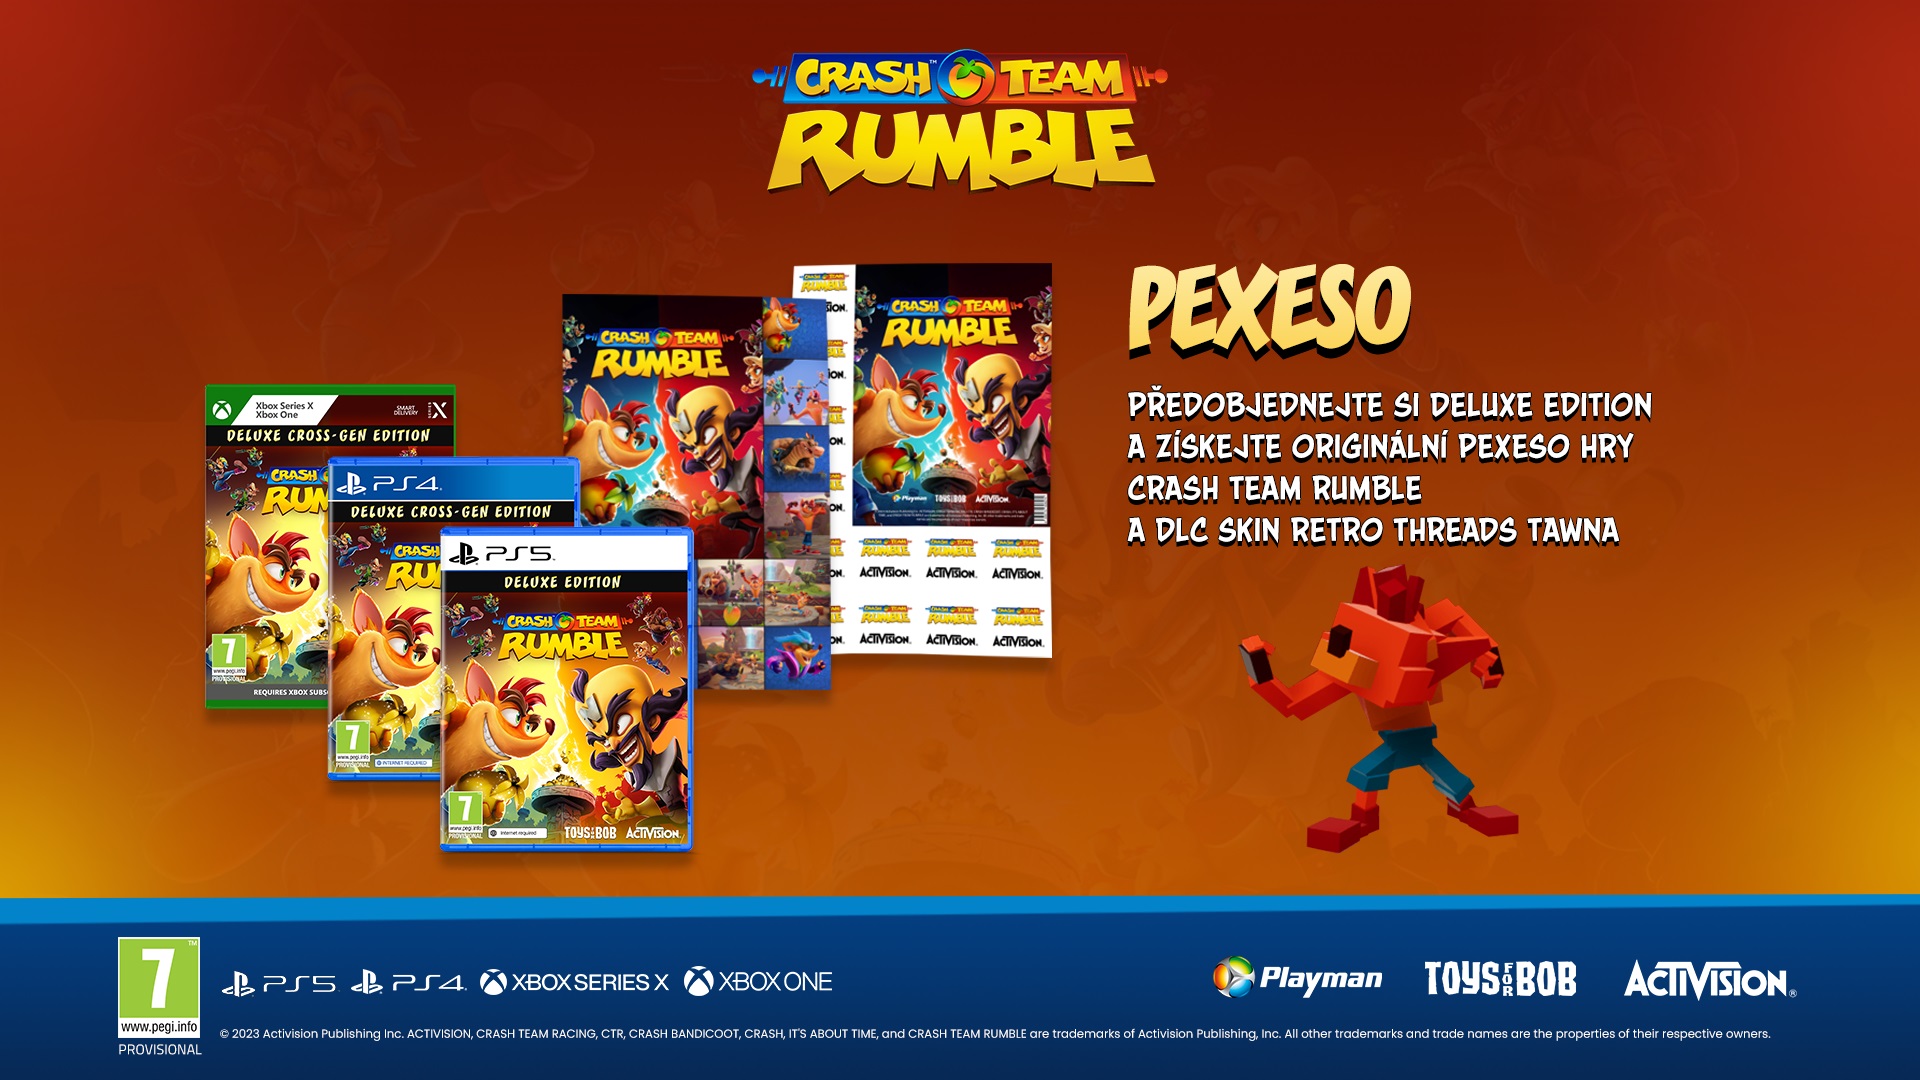 Crash Team Rumble™ Deluxe Edition